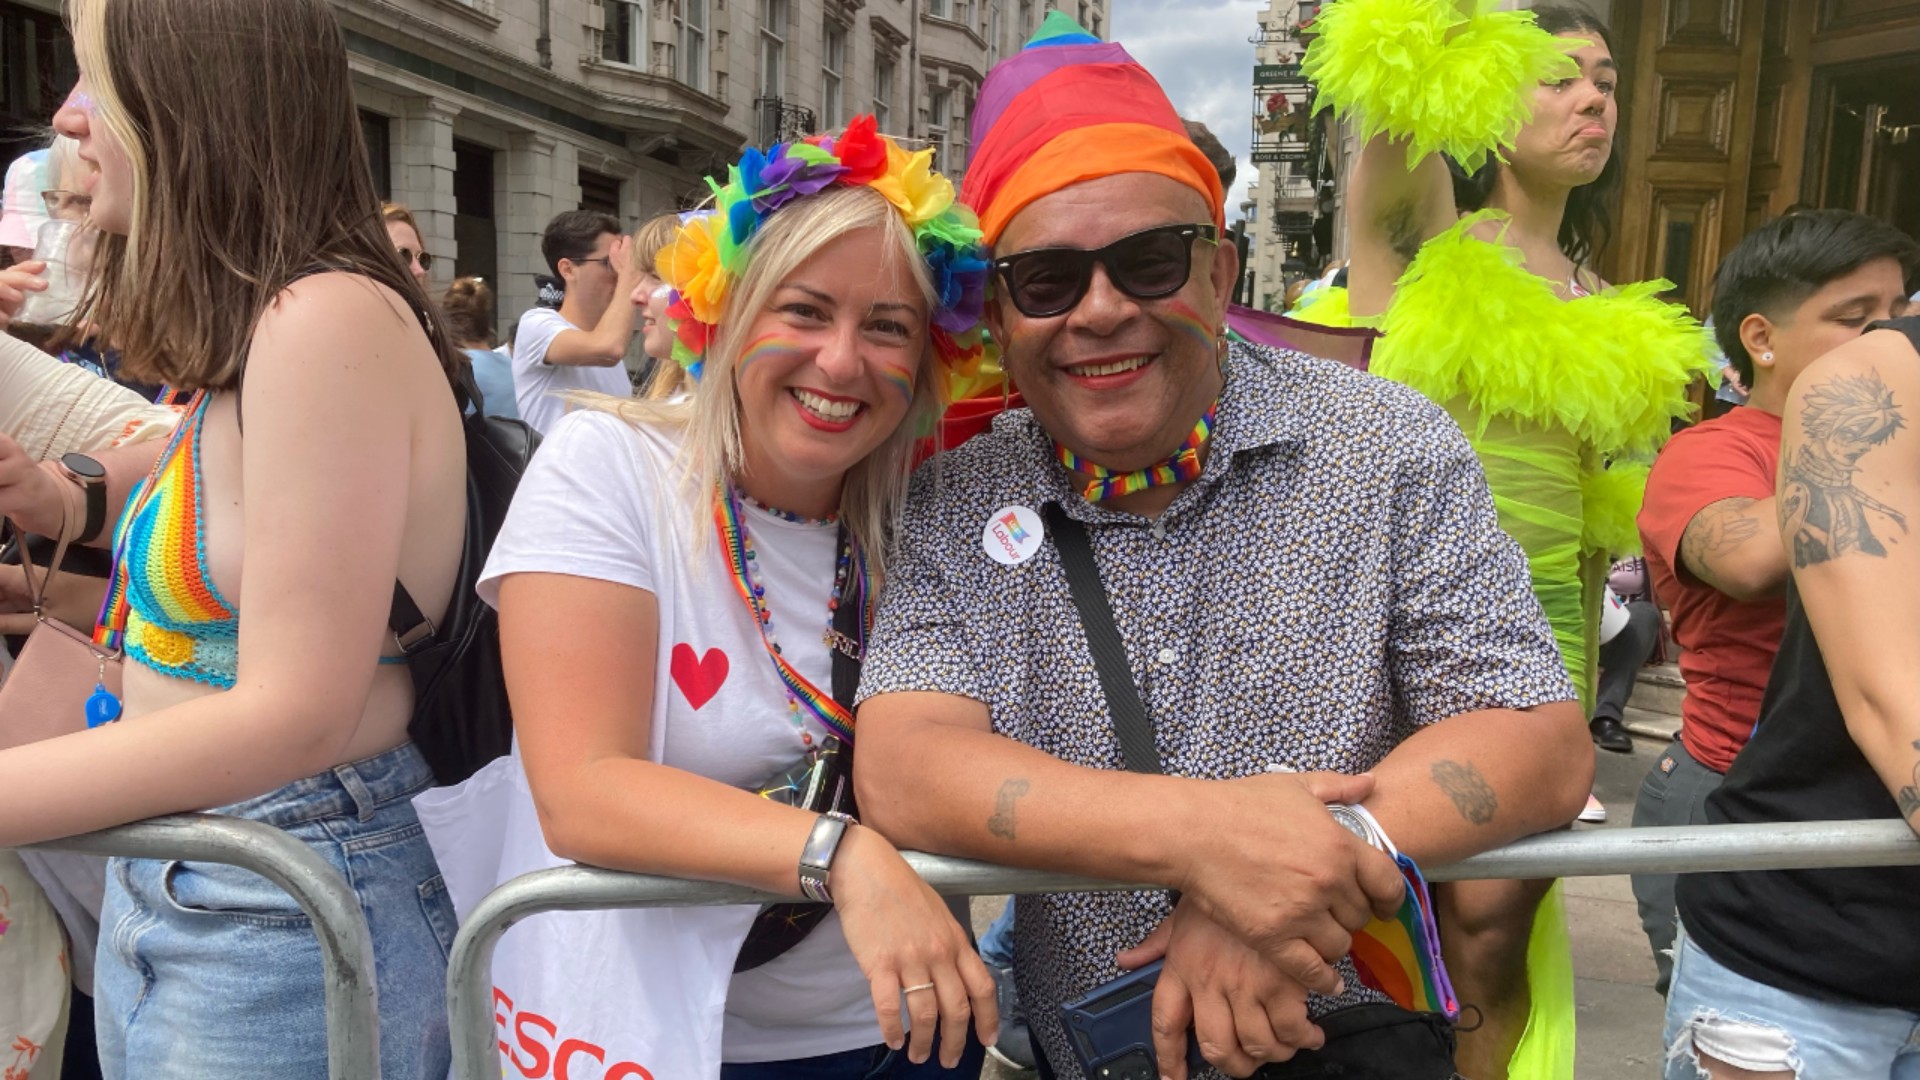 London Pride 2019: Are businesses taking advantage? - BBC News